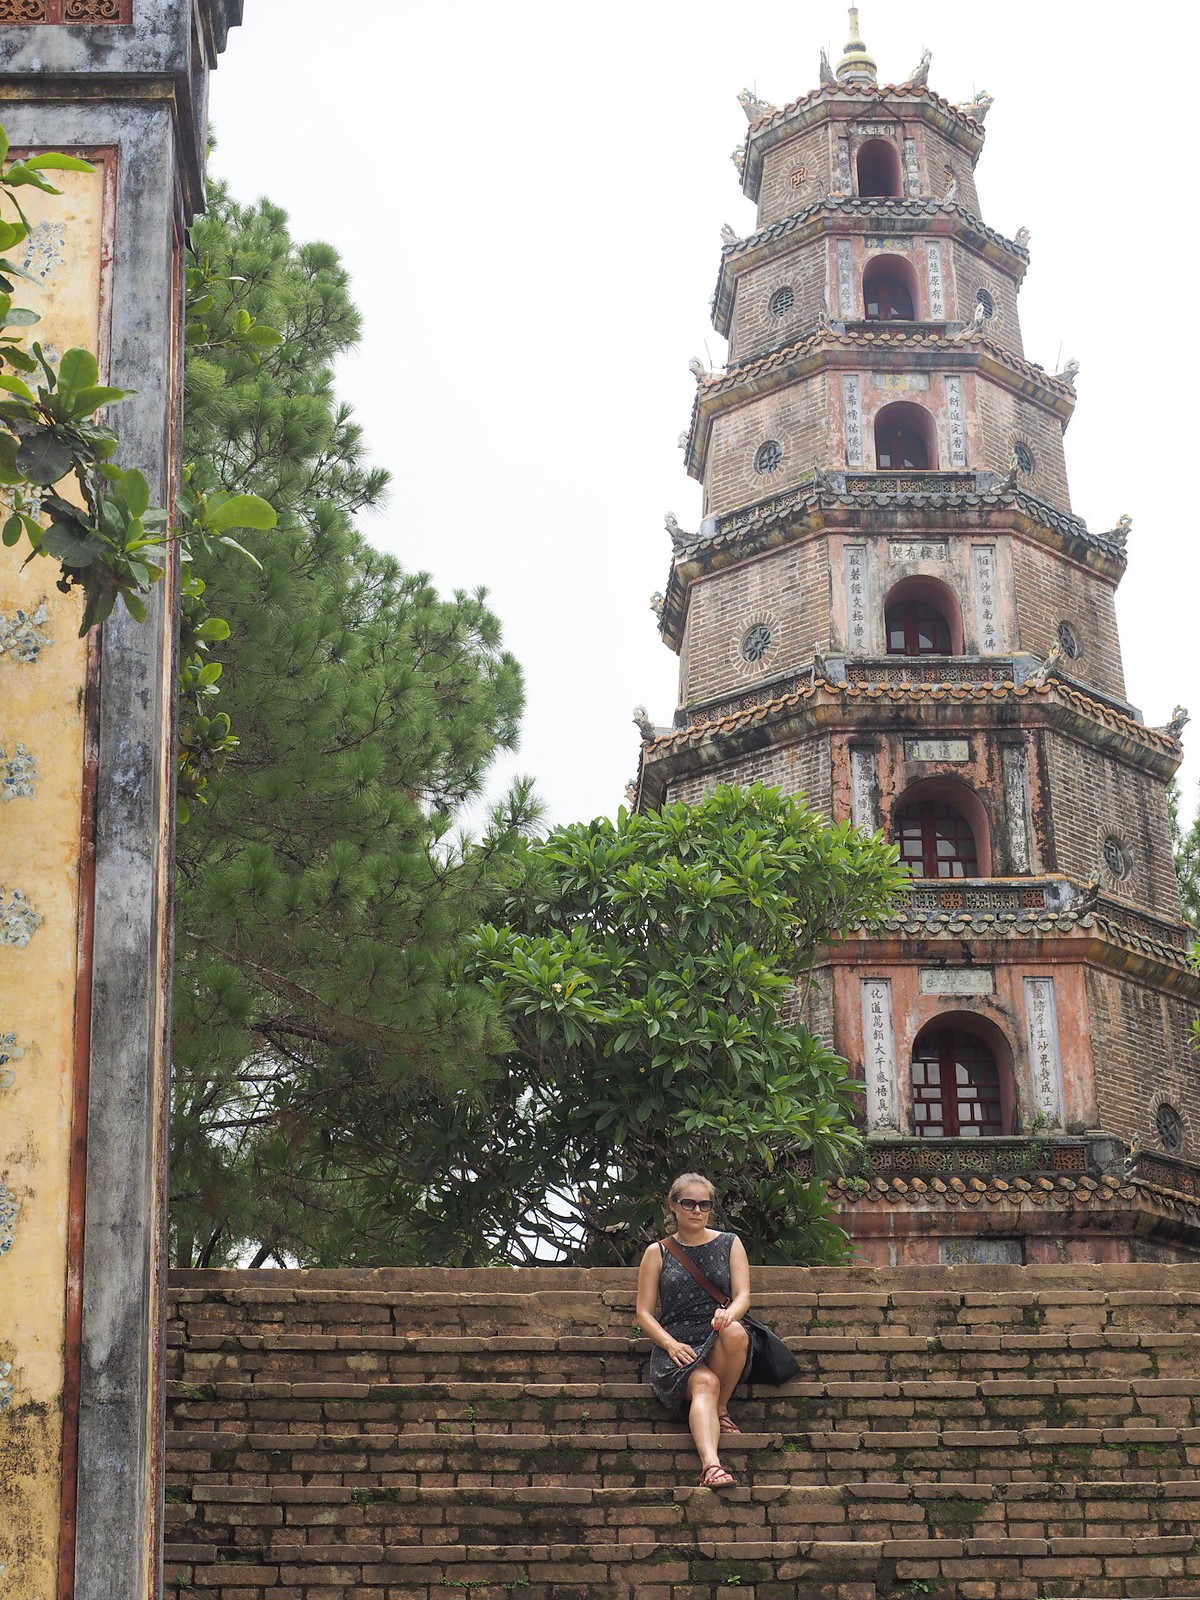 Thien Mu Pagoda